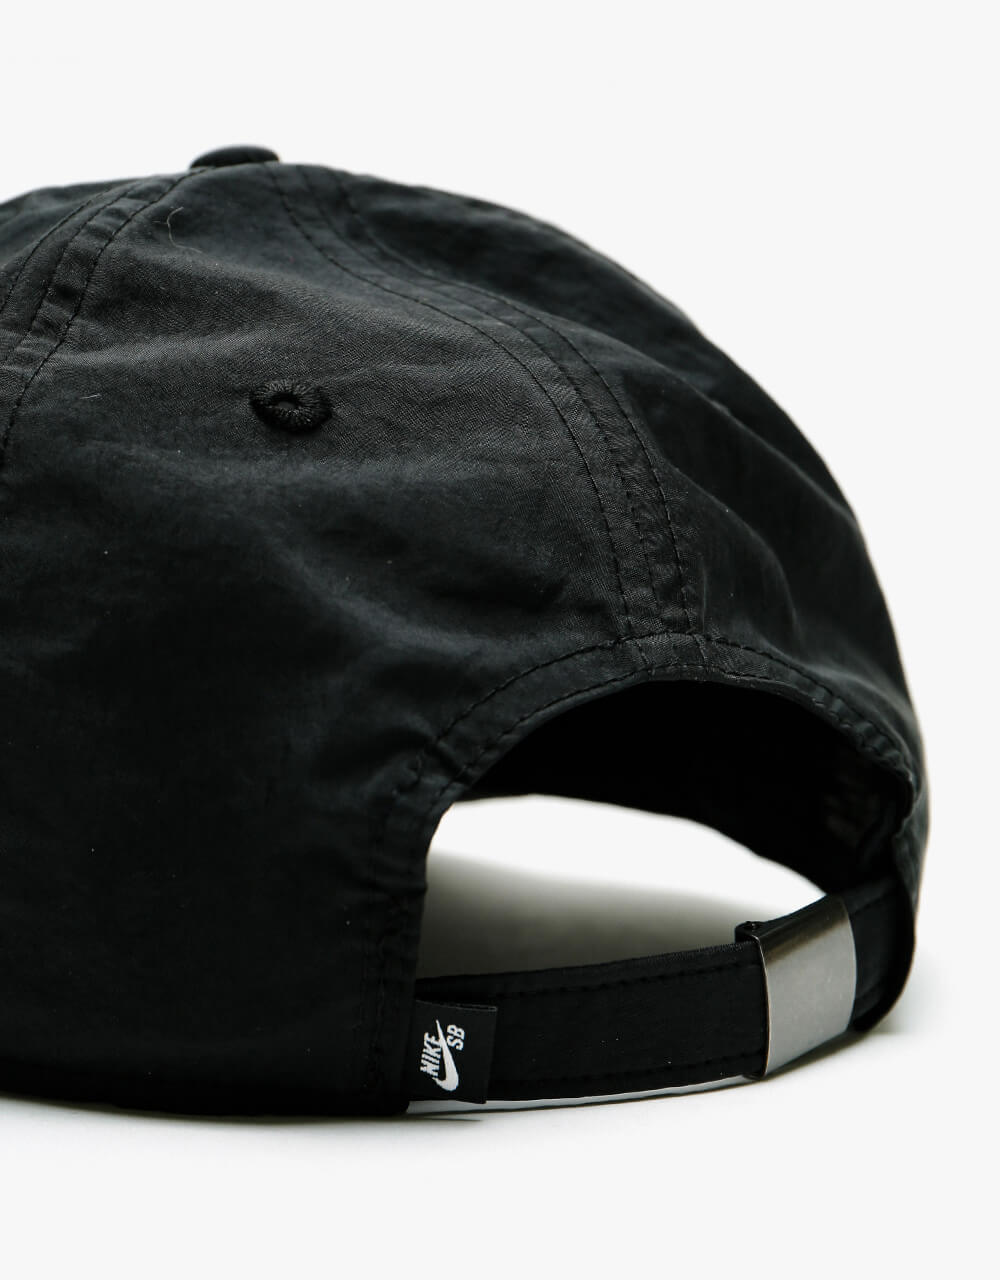 Nike SB Flatbill JDI Graphic Strapback Cap - Black/Black